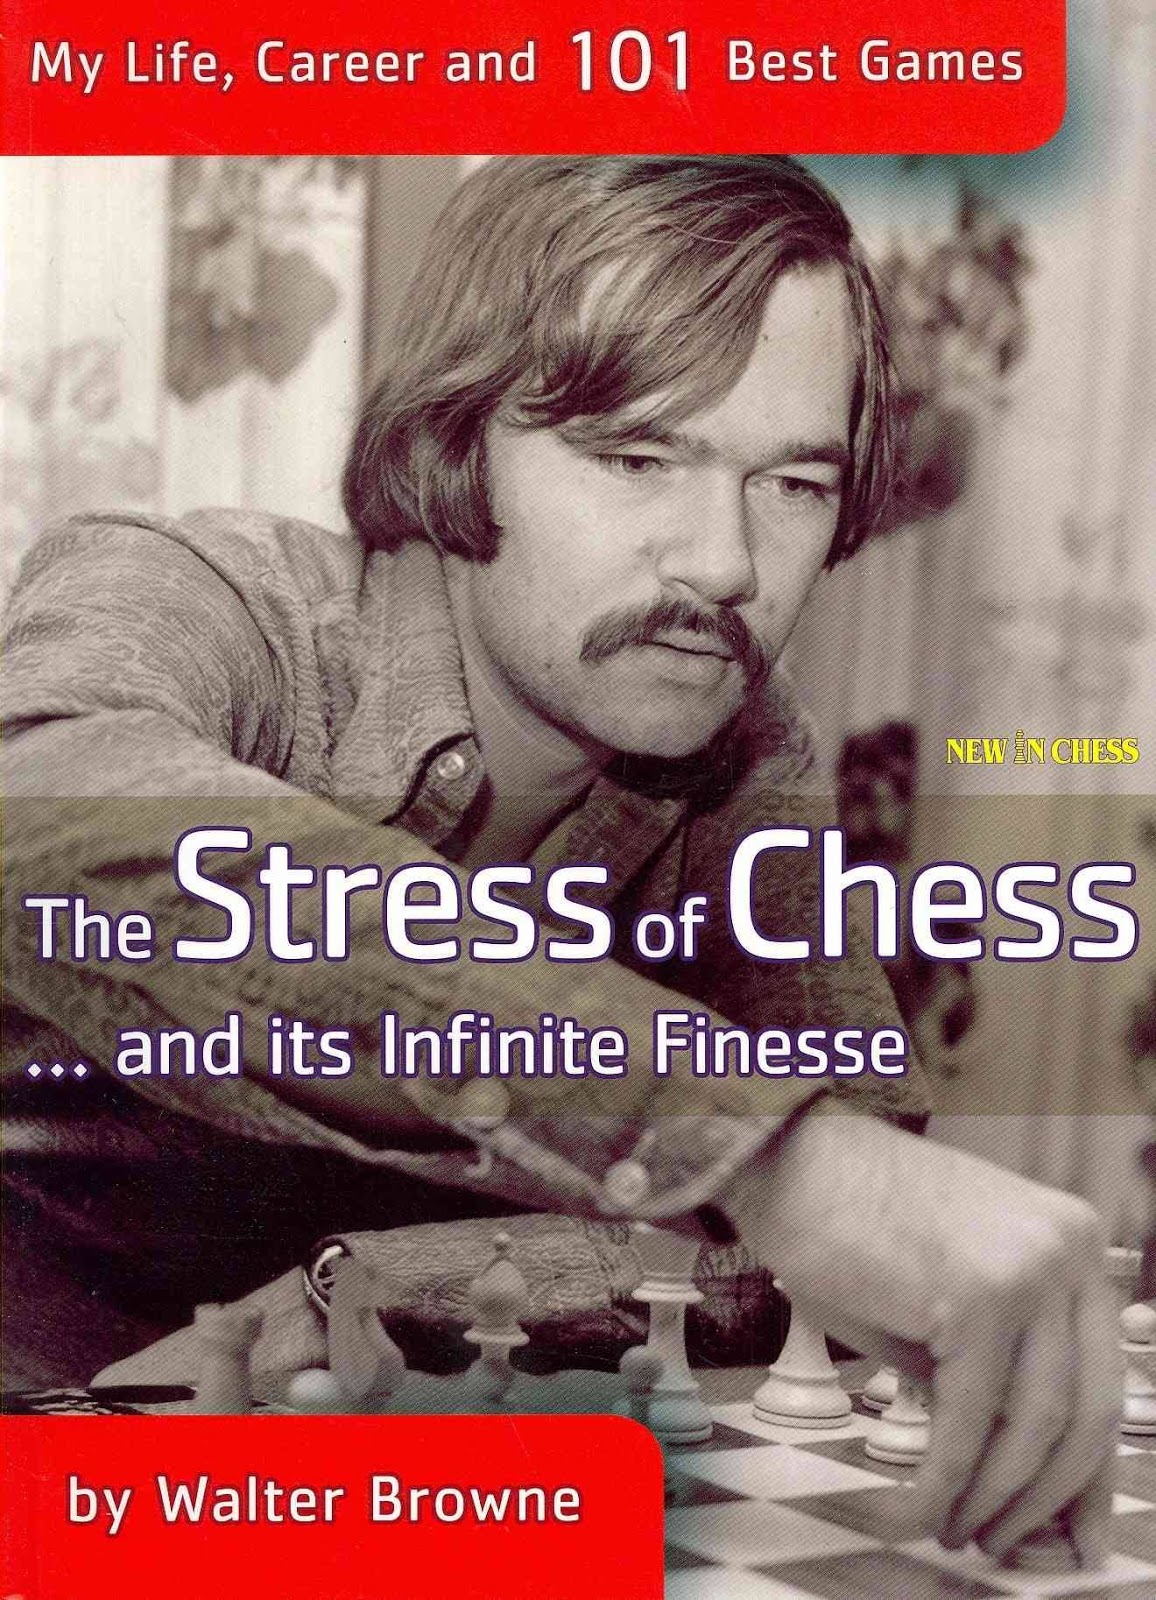 Studies in the Caro Kann Defense - Chess Lecture - Volume 101